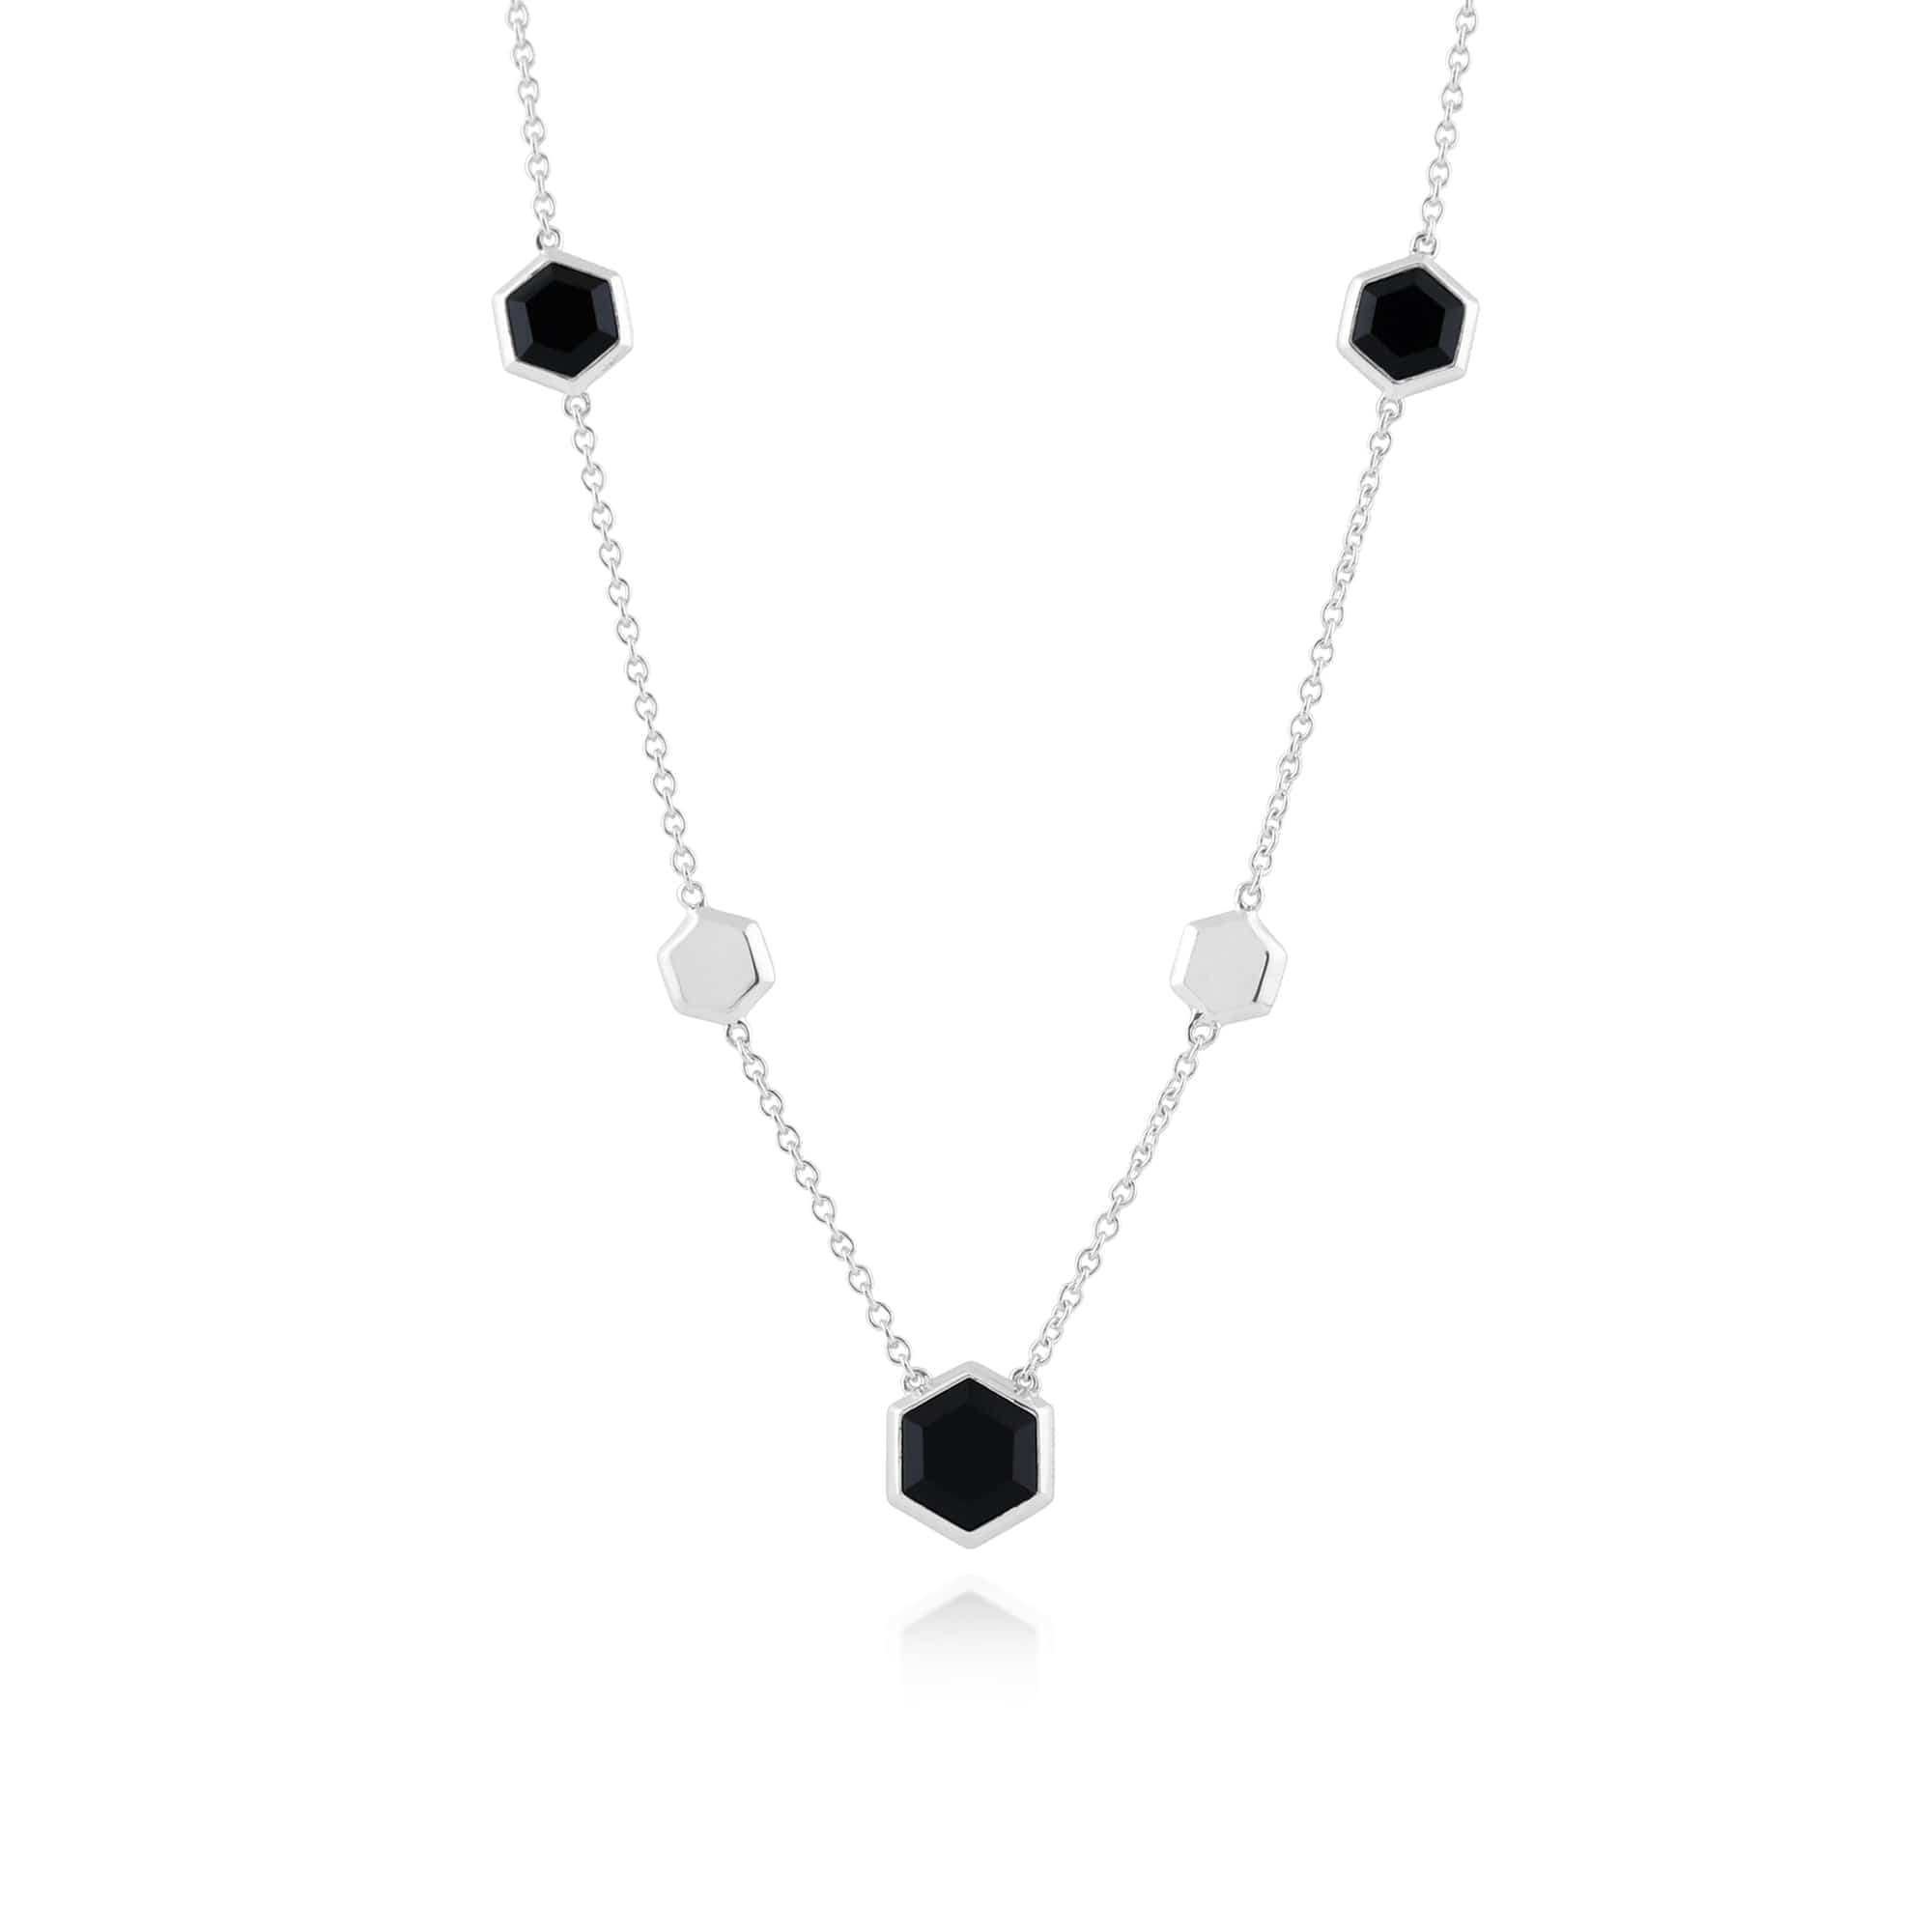 Gemondo  Silver  Black Onyx Hexagonal Prism Necklace 